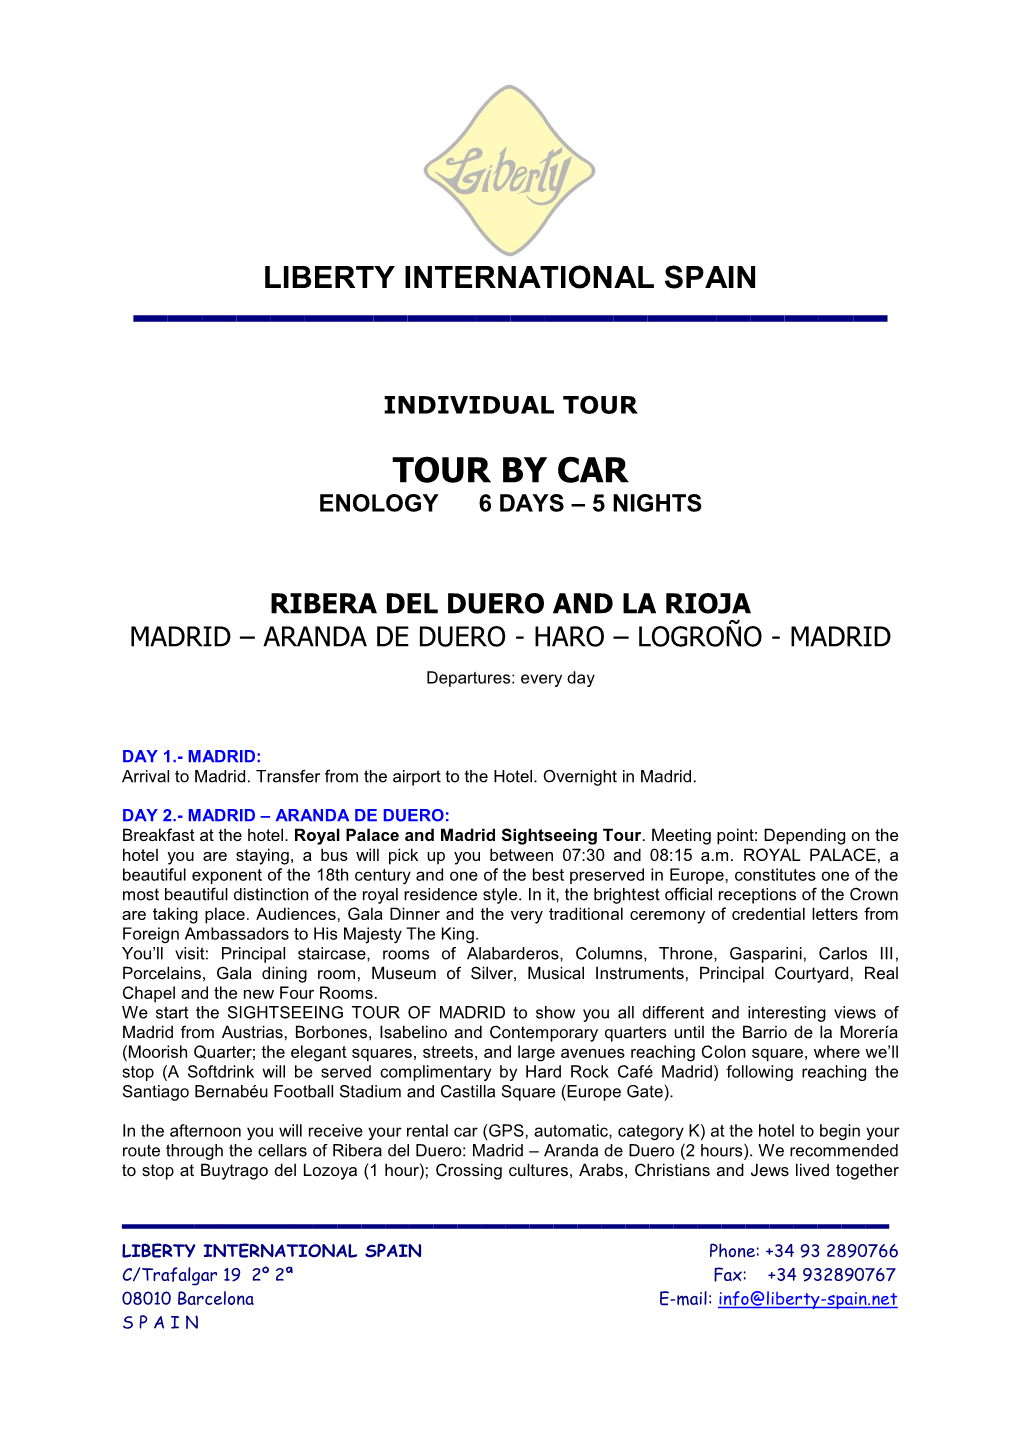 Liberty International Spain ▬▬▬▬▬▬▬▬▬▬▬▬▬▬▬▬▬▬▬▬▬▬